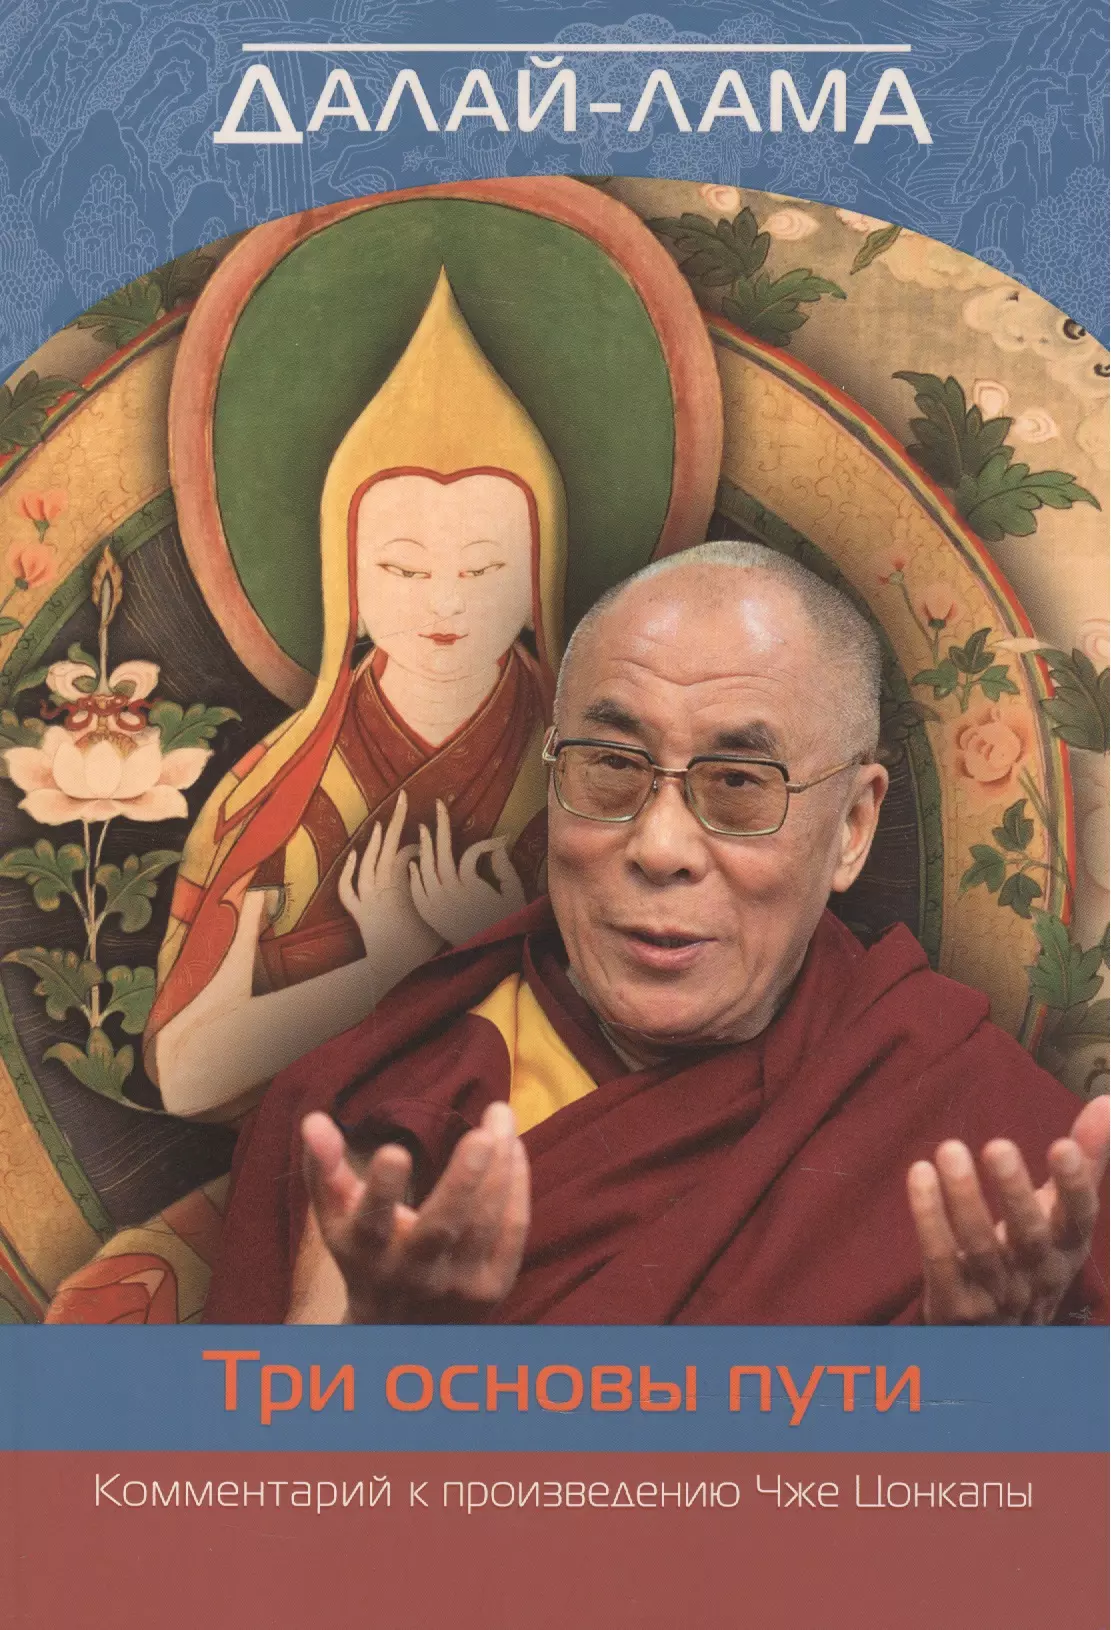 Далай Лама 14 Нгагванг Ловзанг Тэнцзин Гьямцхо, Далай-лама XIV - О трех основах пути. Комментарий к произведению Чже Цонкапы